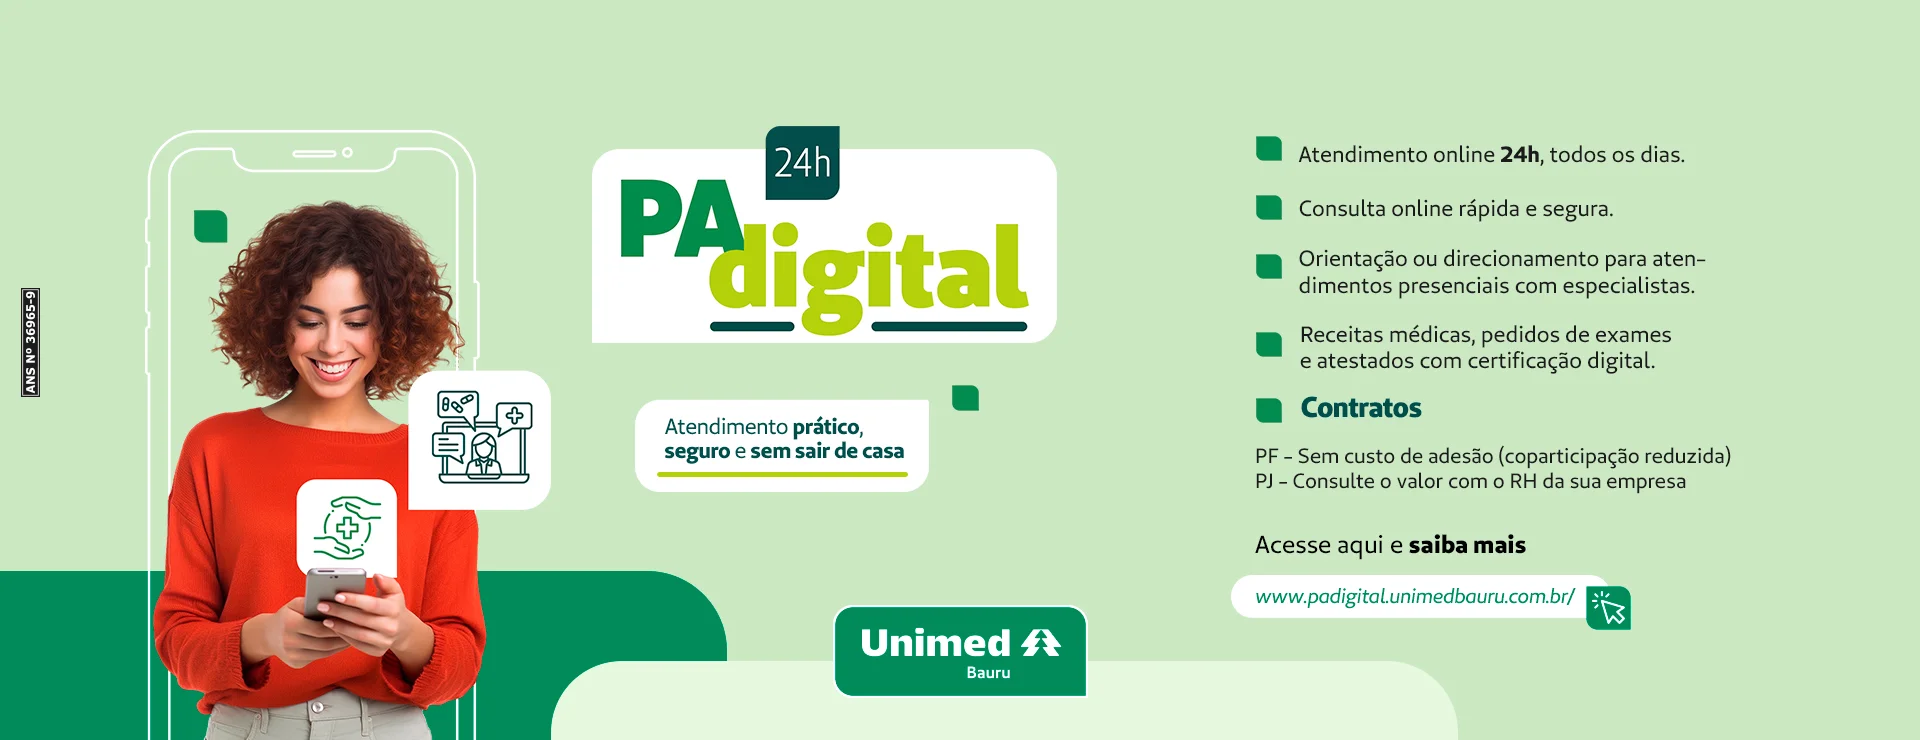 PA digital